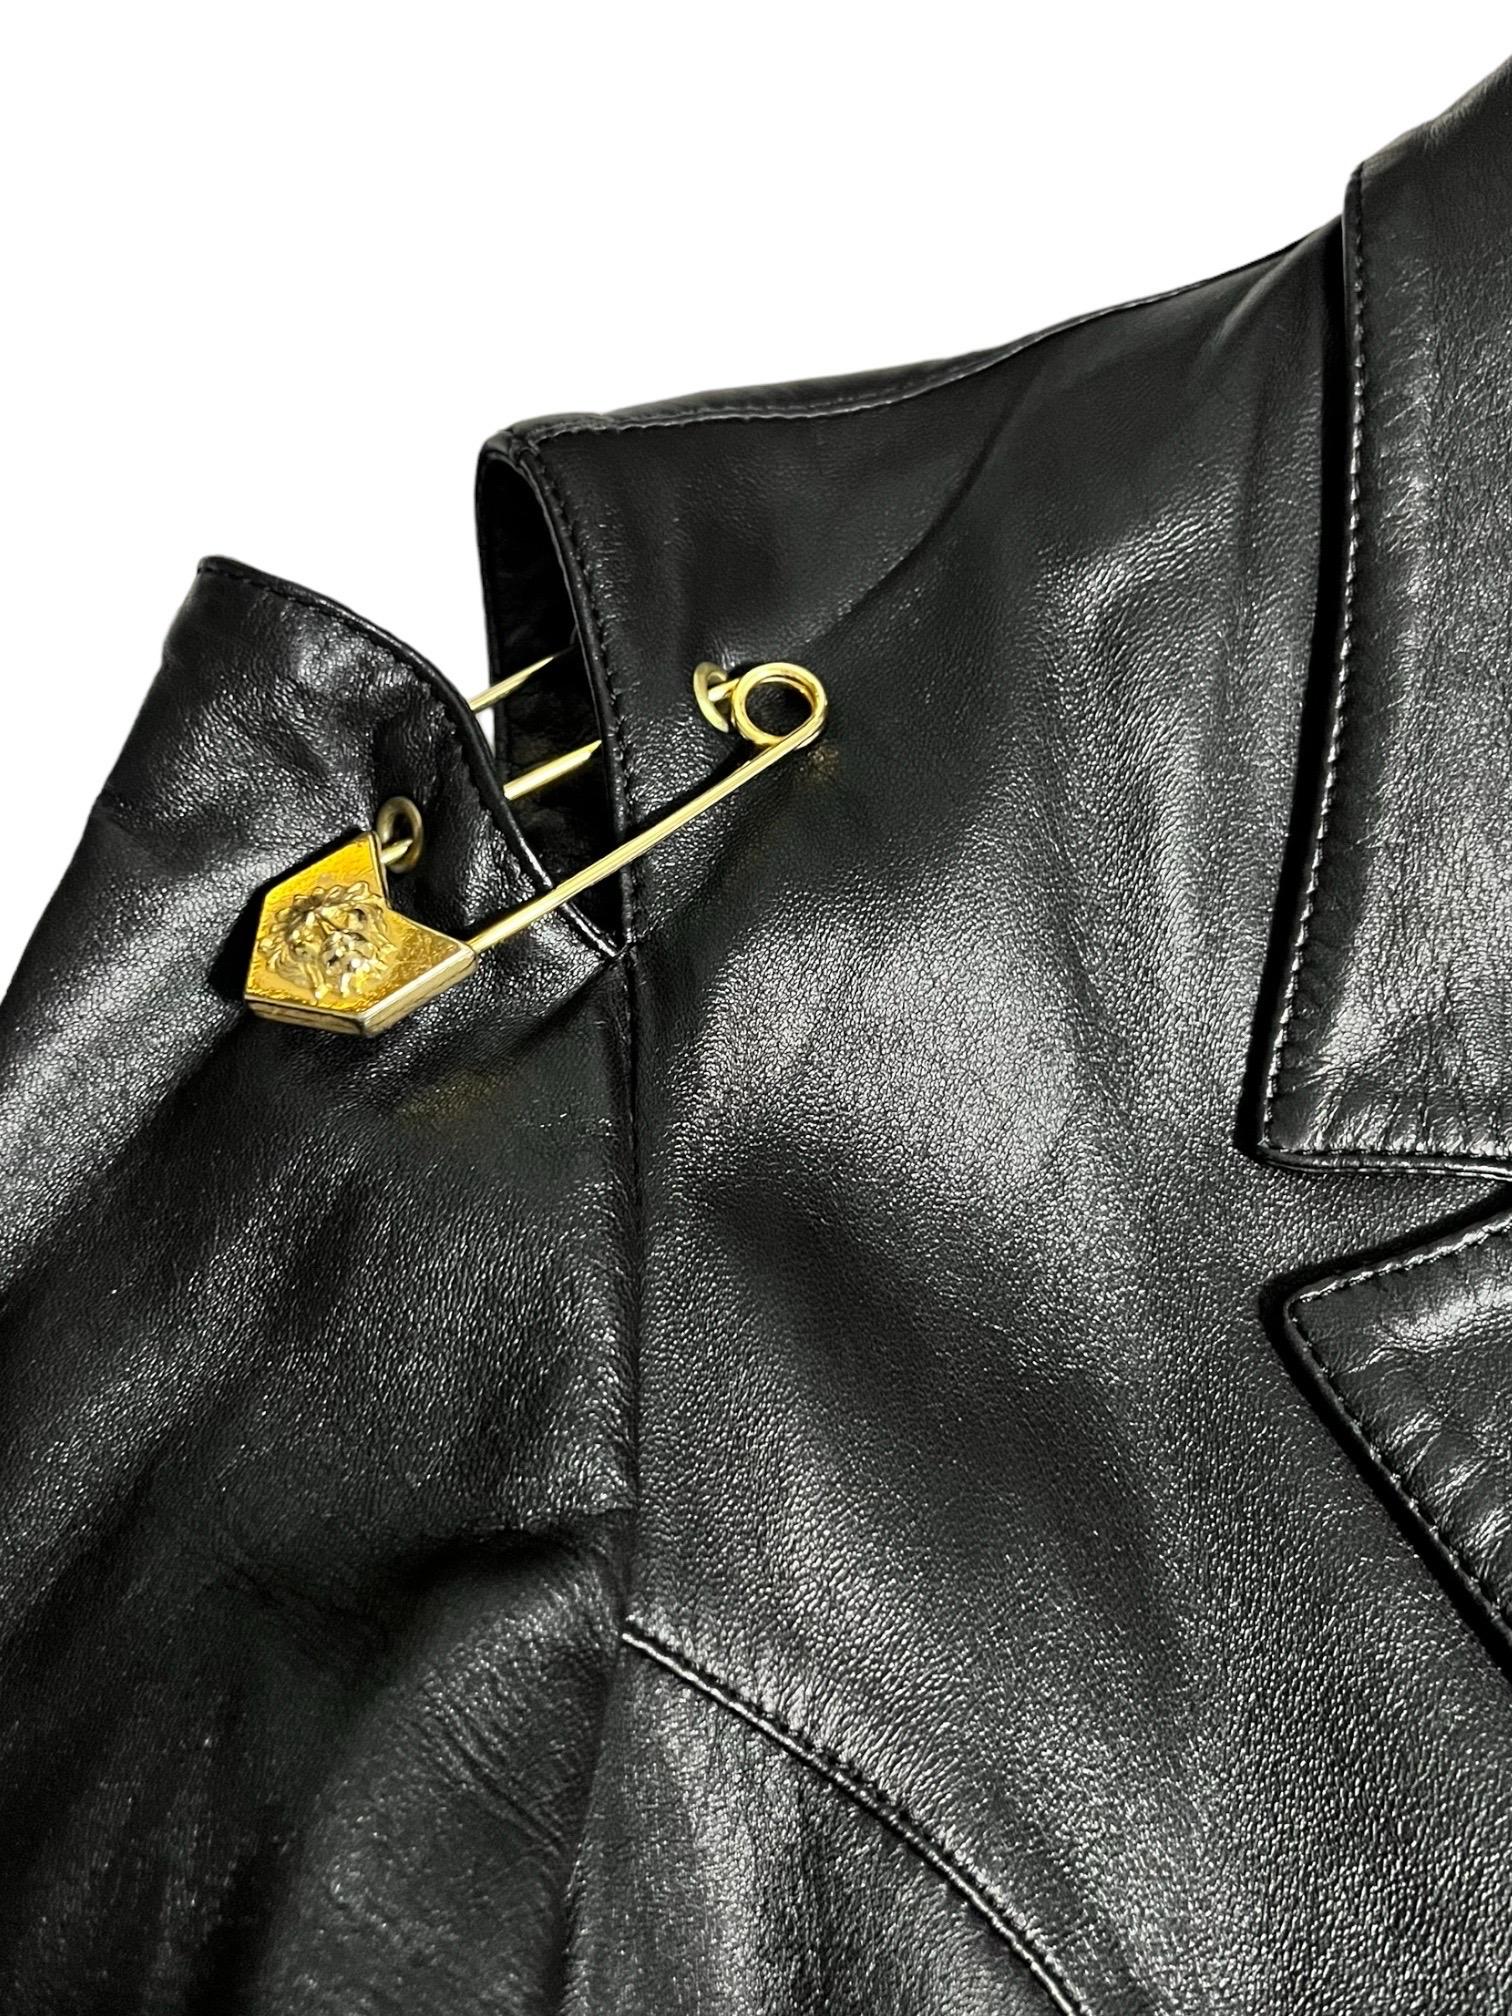 Gianni Versace Versus 90's Vintage Black Leather Safety Pin Jacket 6